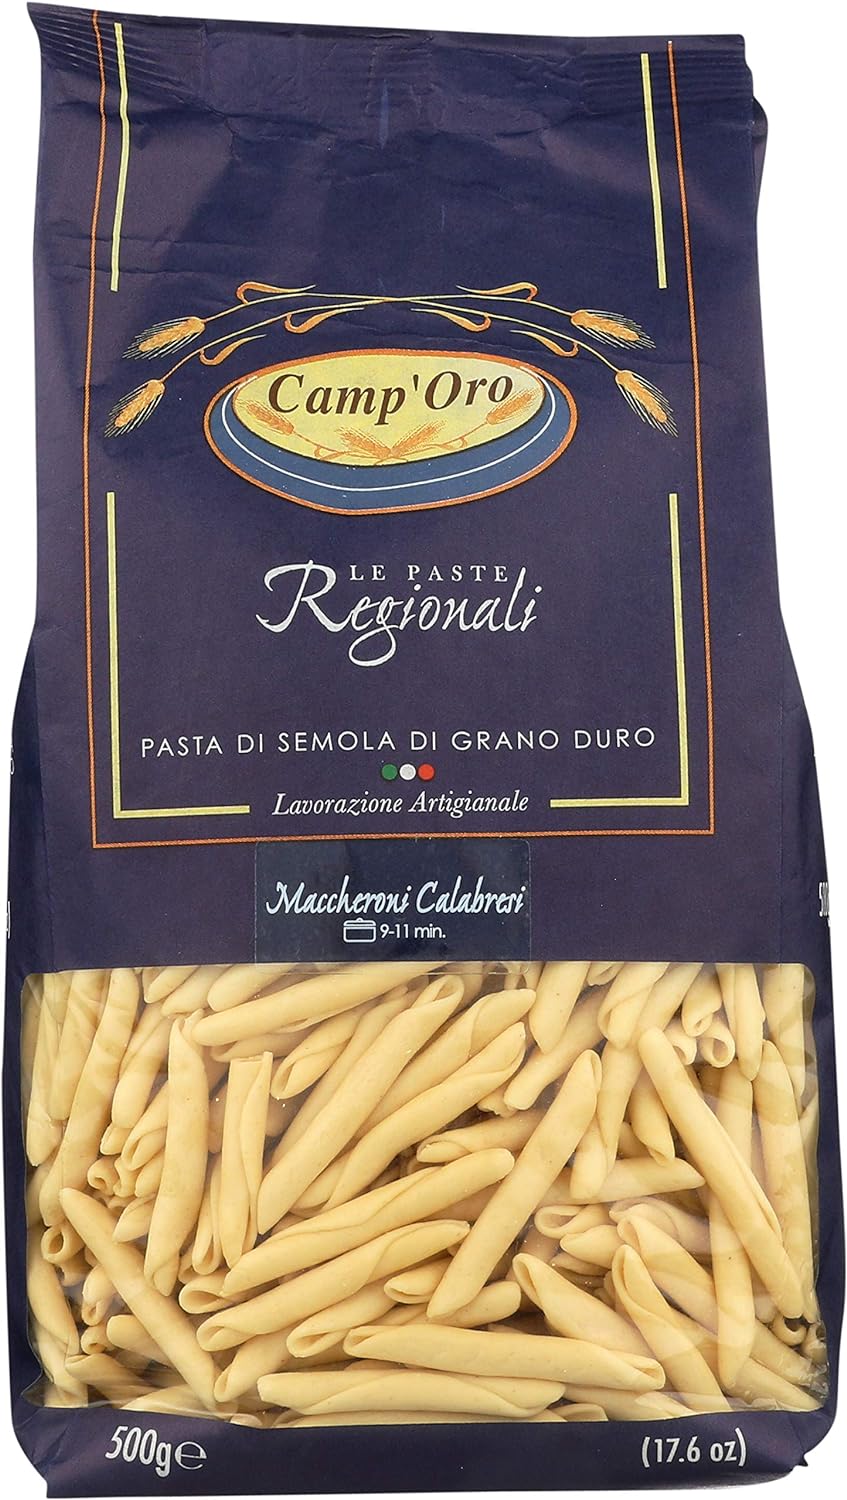 Camp'Oro Le Regionali Maccheroni Calabresi Pasta Pack of 16 (16 Ounce) Bag